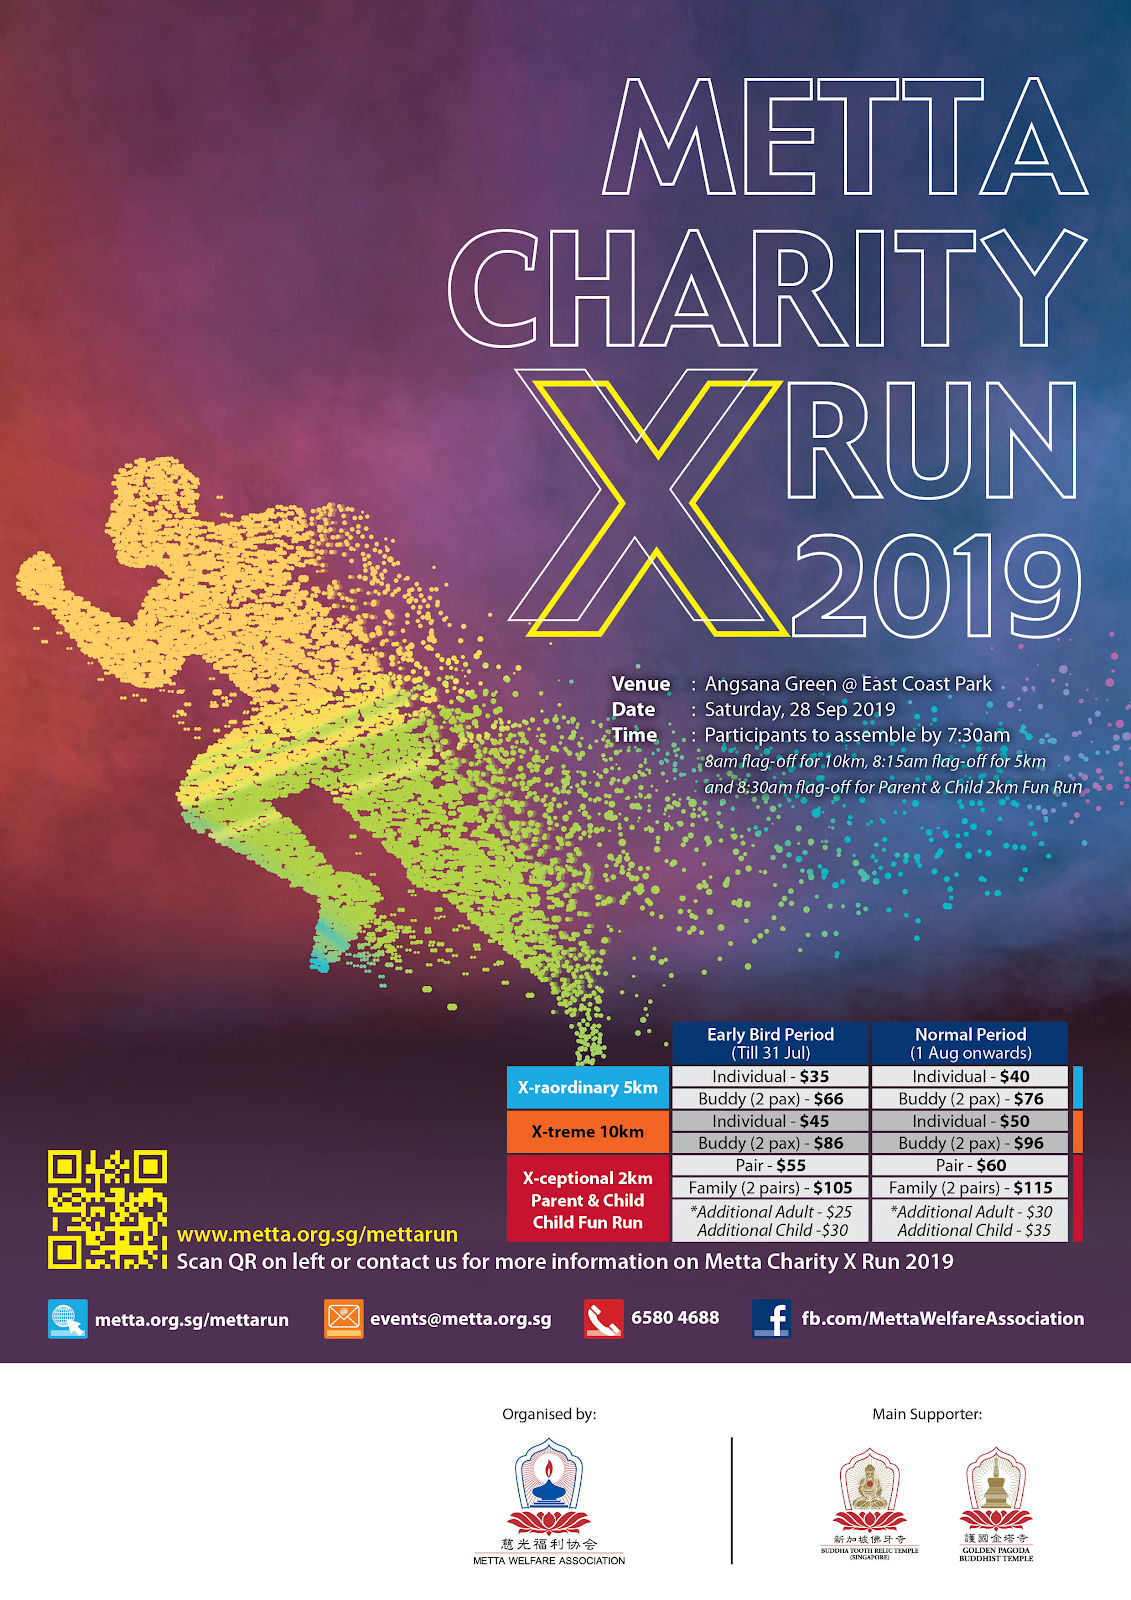 Sports events in Singapore - Metta Charity X Run 2019